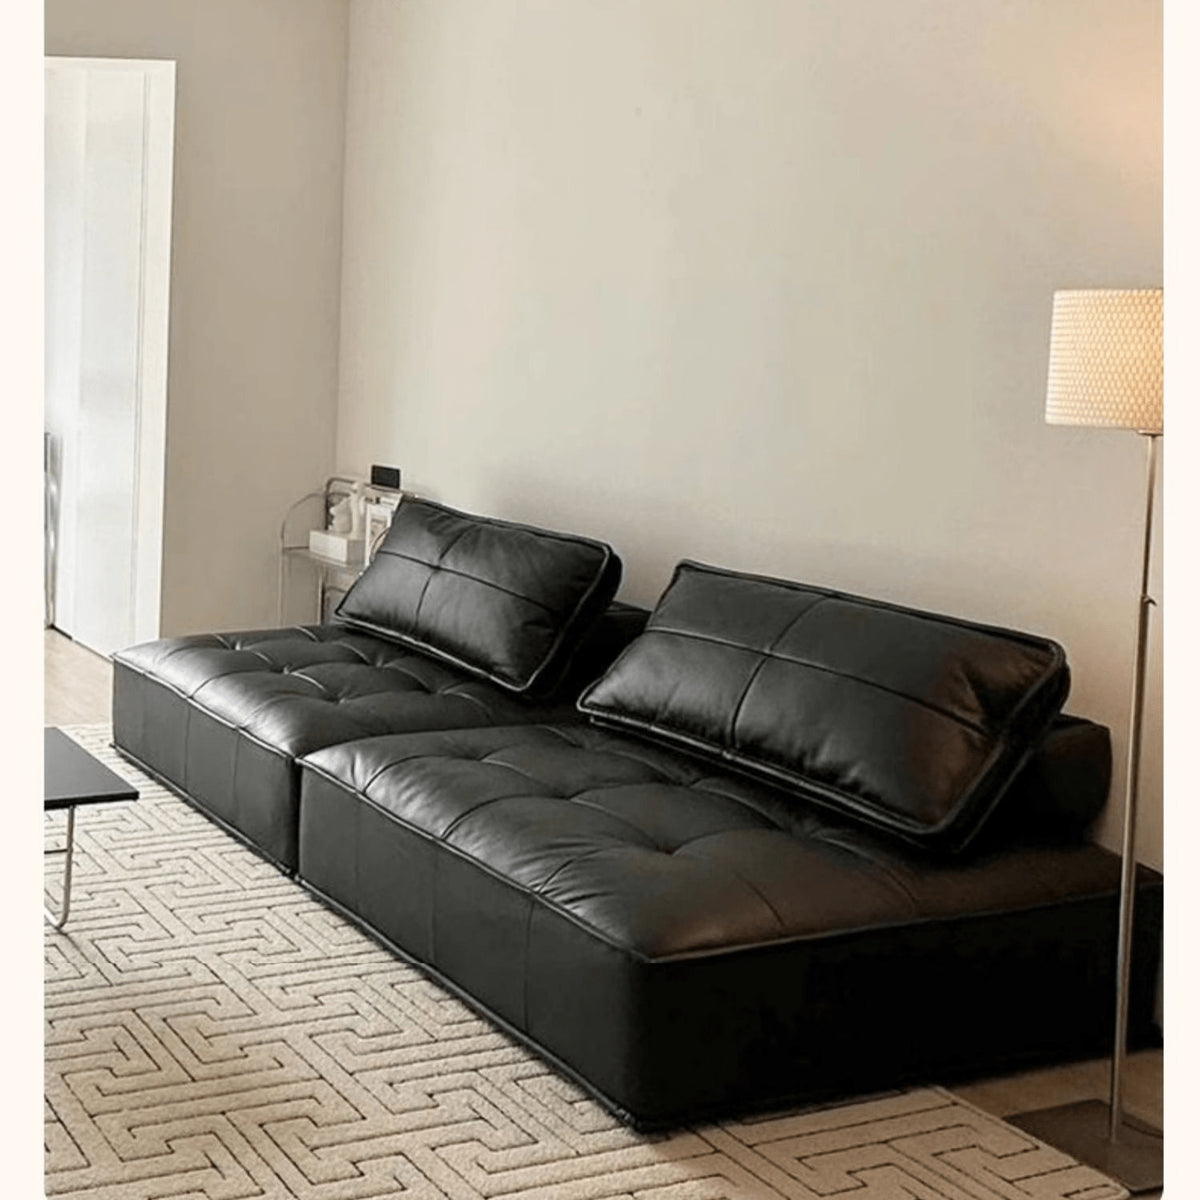 Stylish Modern Sofa in Light Gray and Brown Techno Fabric - Sleek Black Accents yw-181